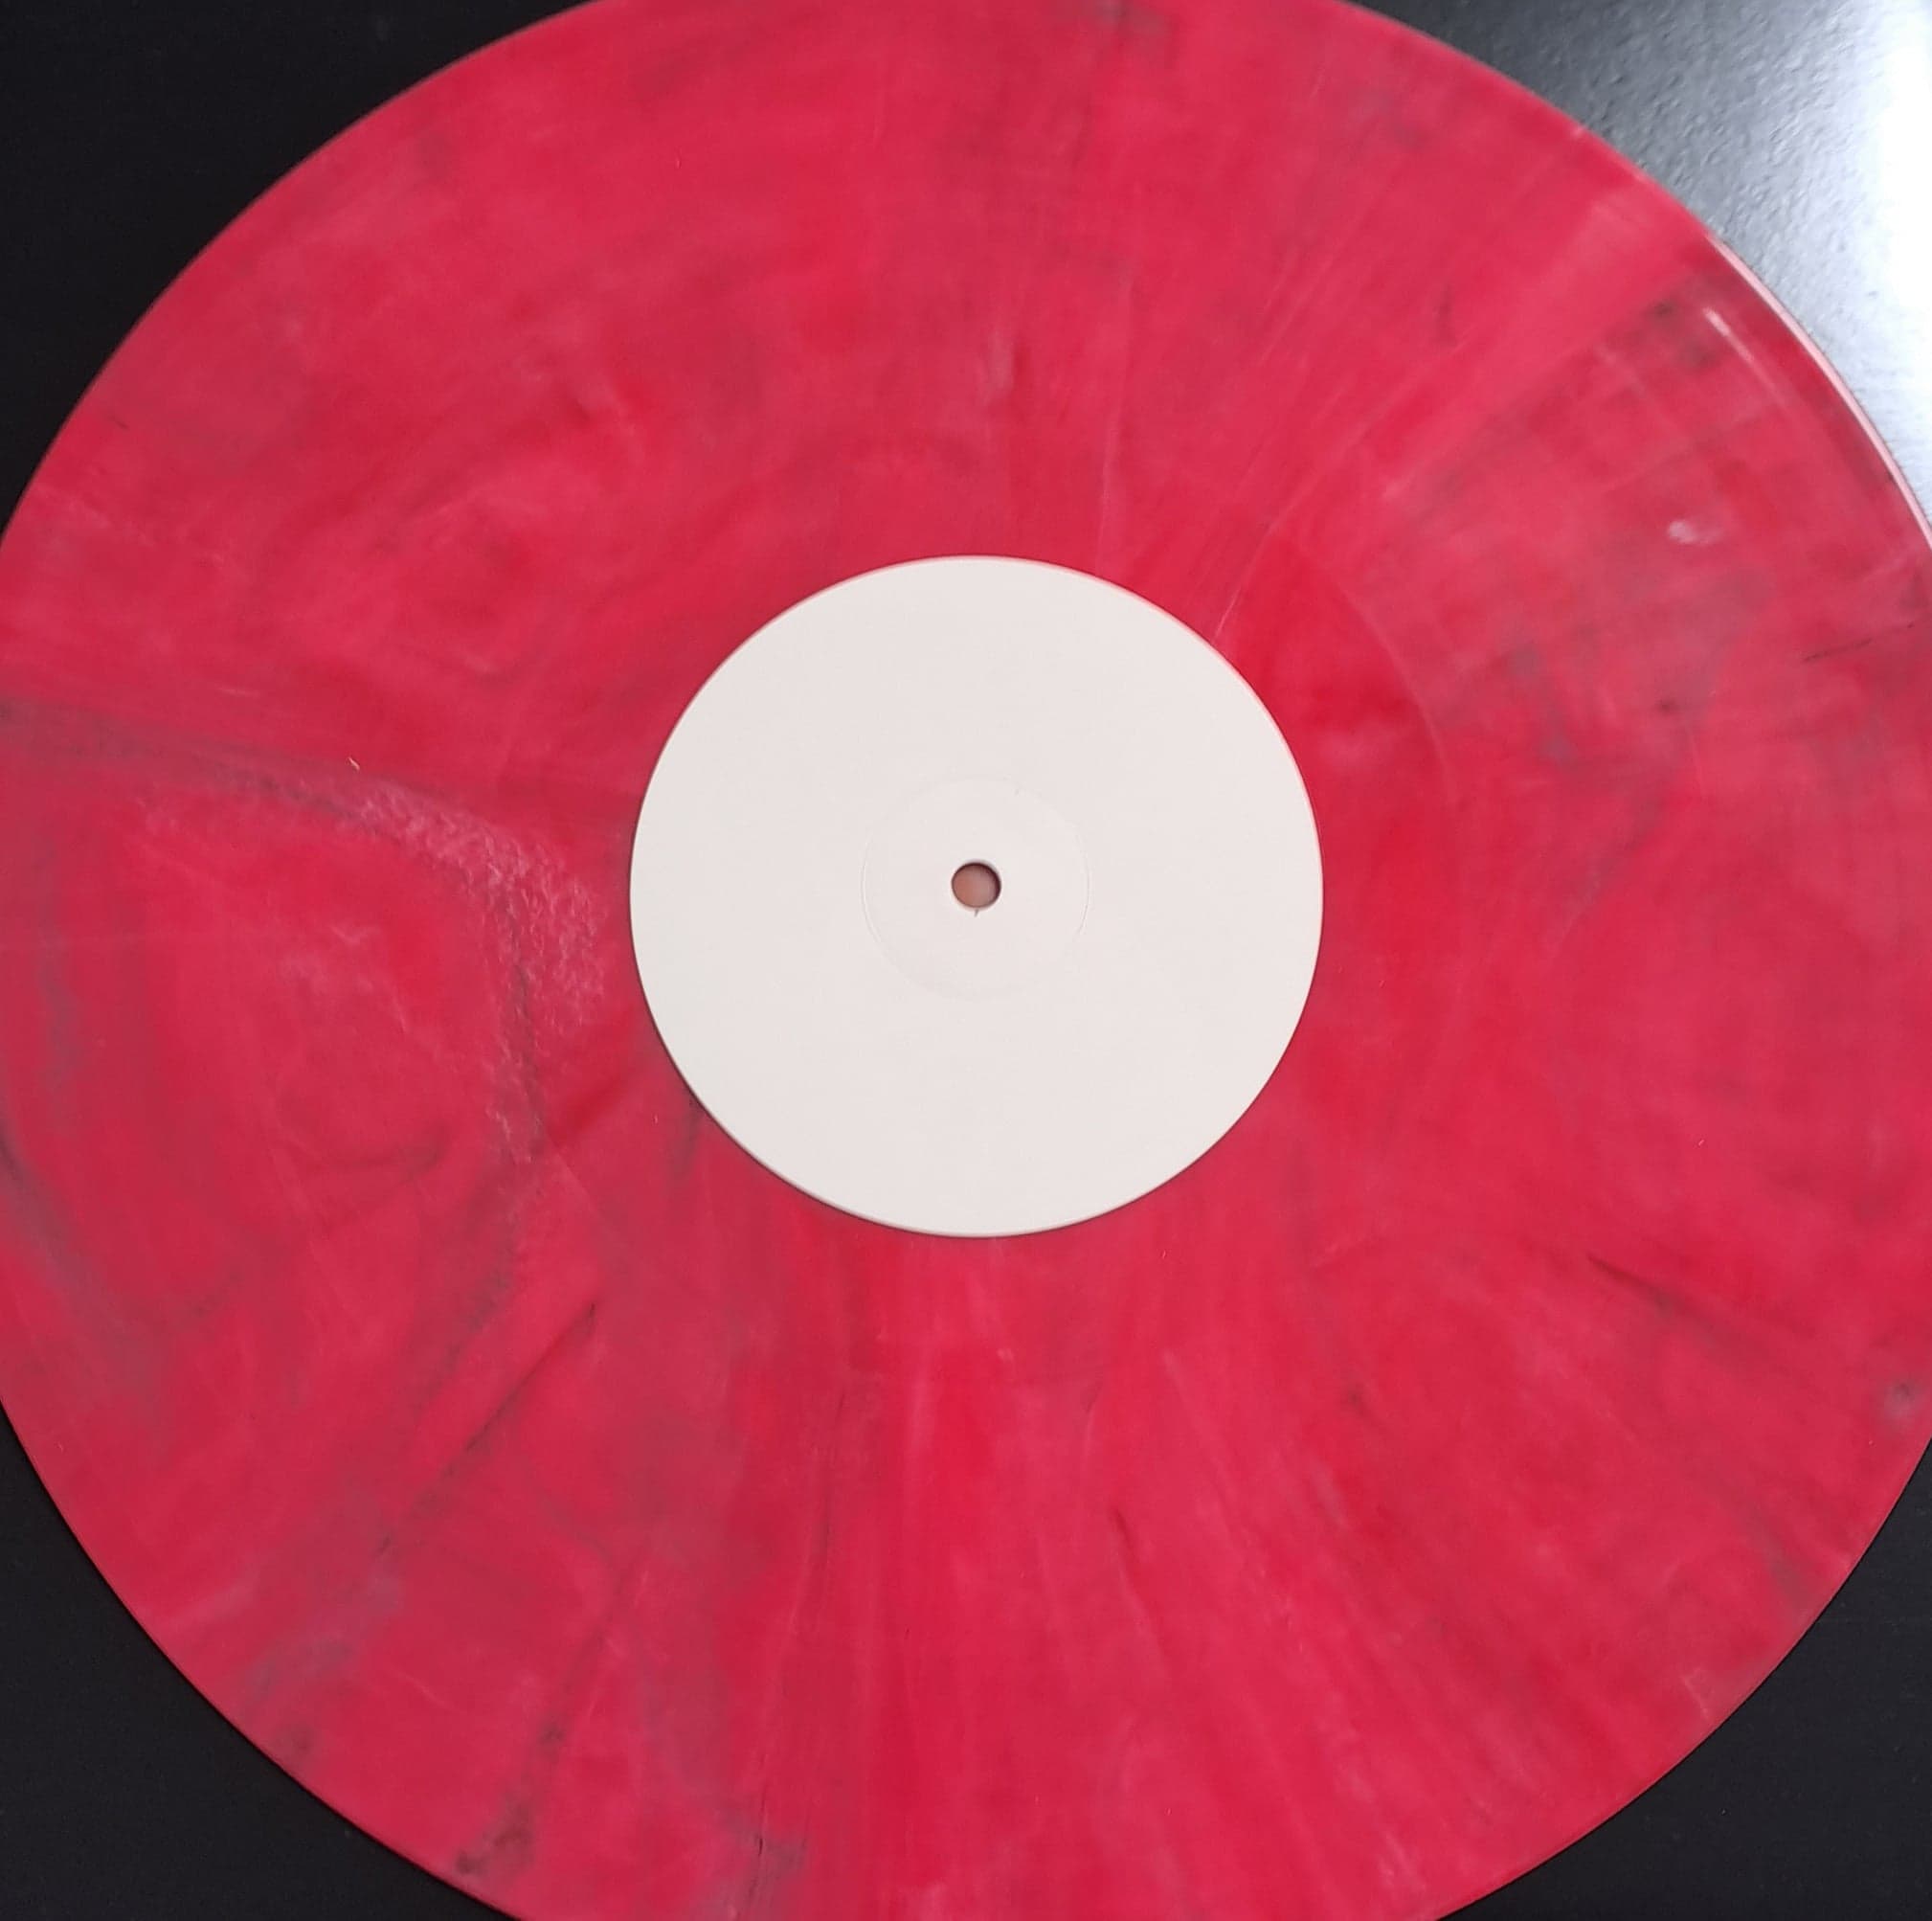 Bourrin 001 (White Label) - vinyle tribecore